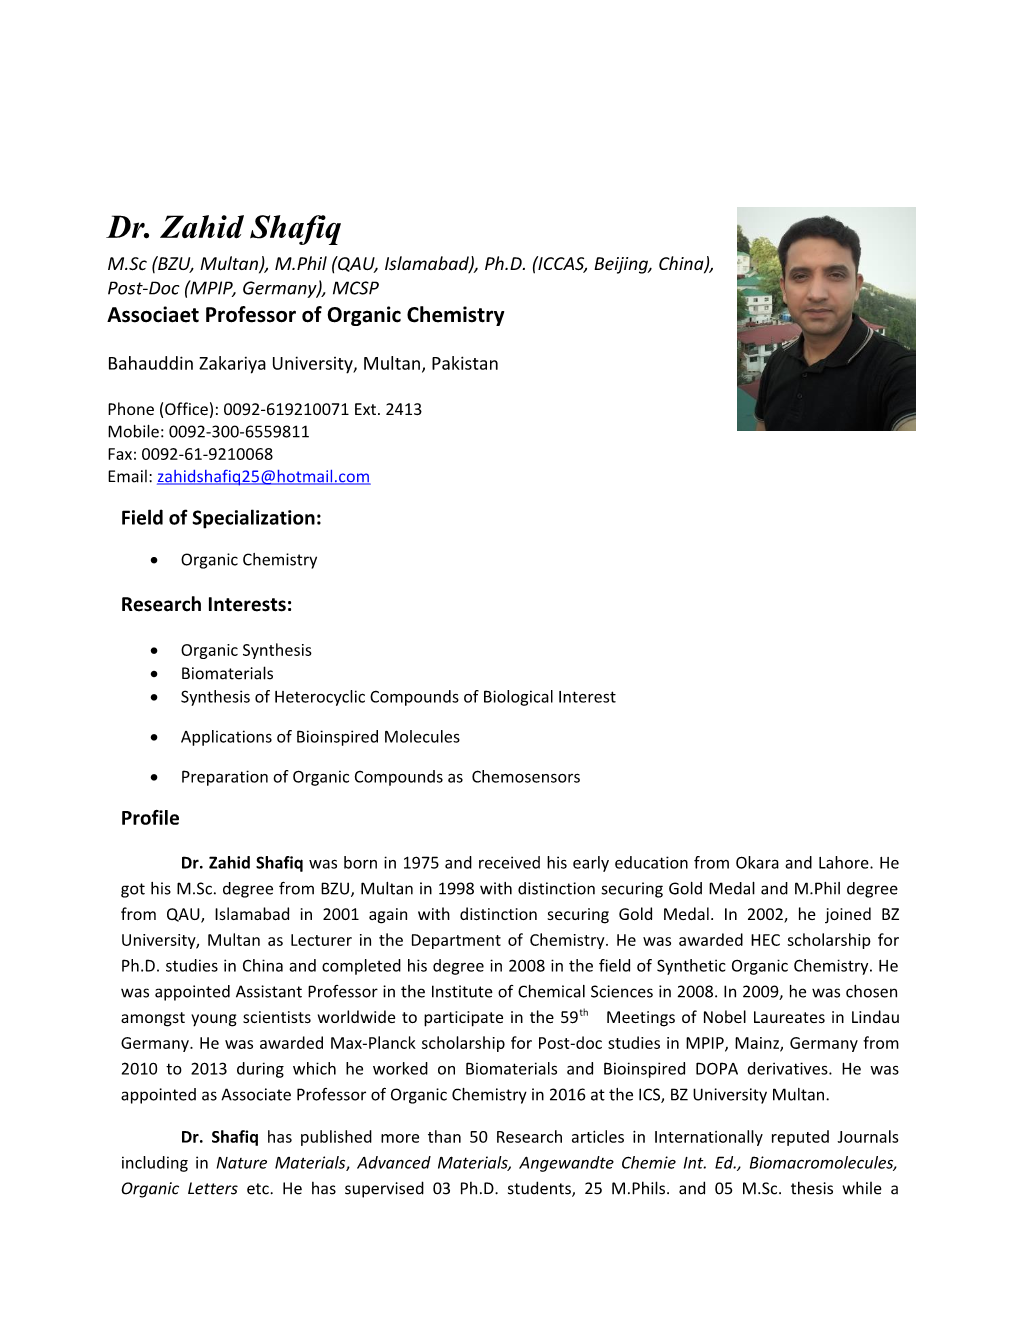 Dr. Zahid Shafiq